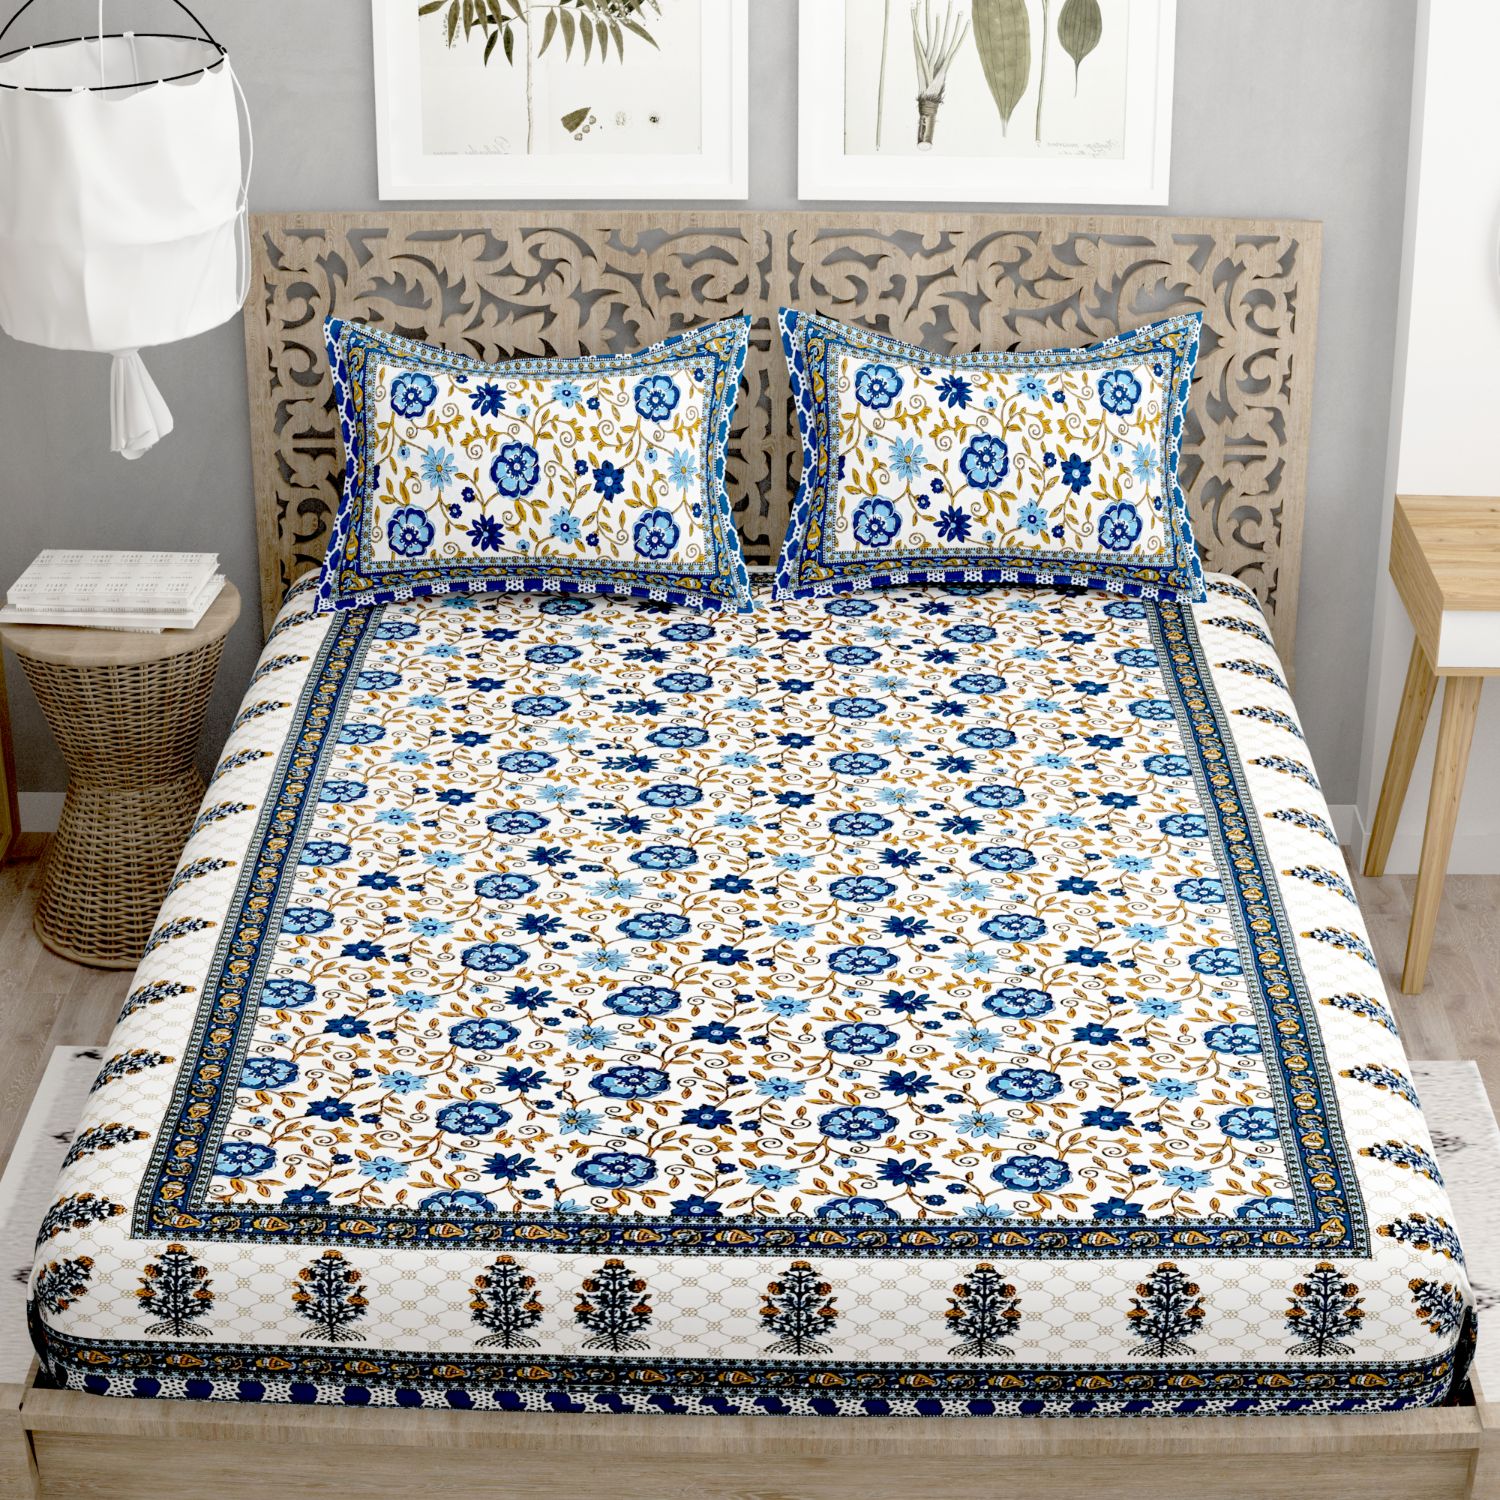 UniqChoice 180 TC Blue Color 100% Cotton Printed Mackdaddy Size Bedshizzle With 2 Pillow Cover(ELEG-60-Blue)